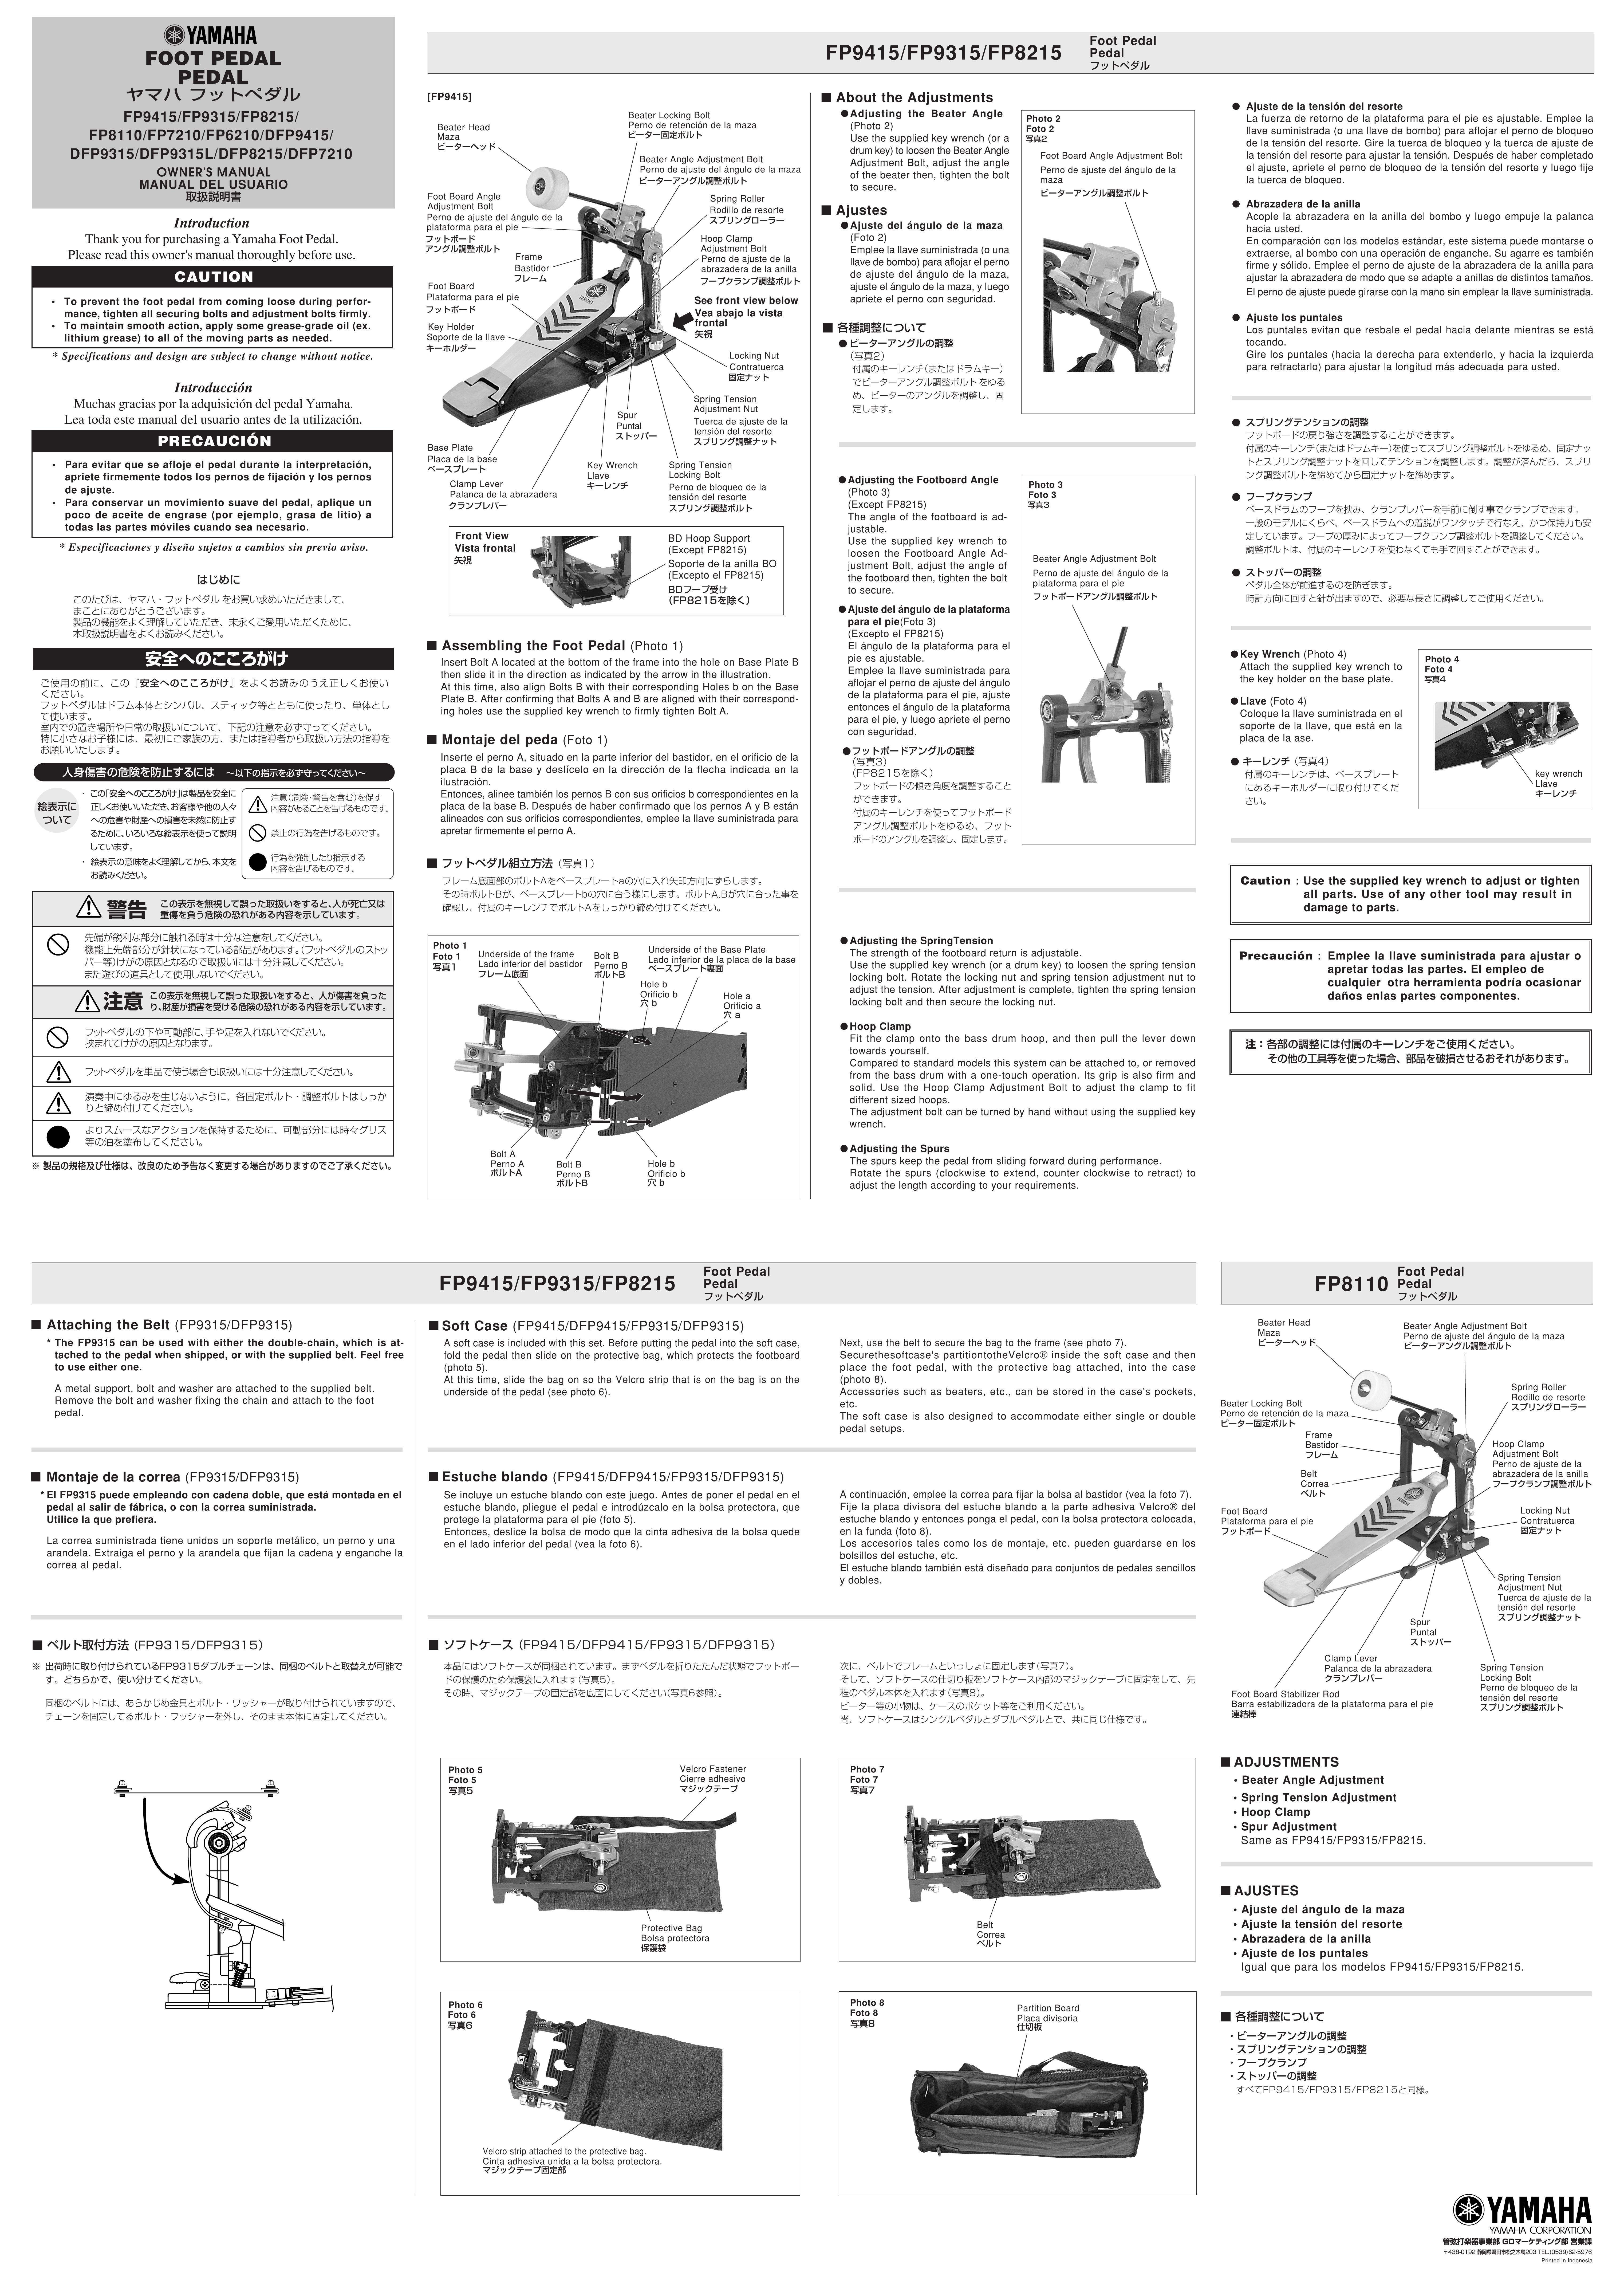 Yamaha FP9415 Music Pedal User Manual